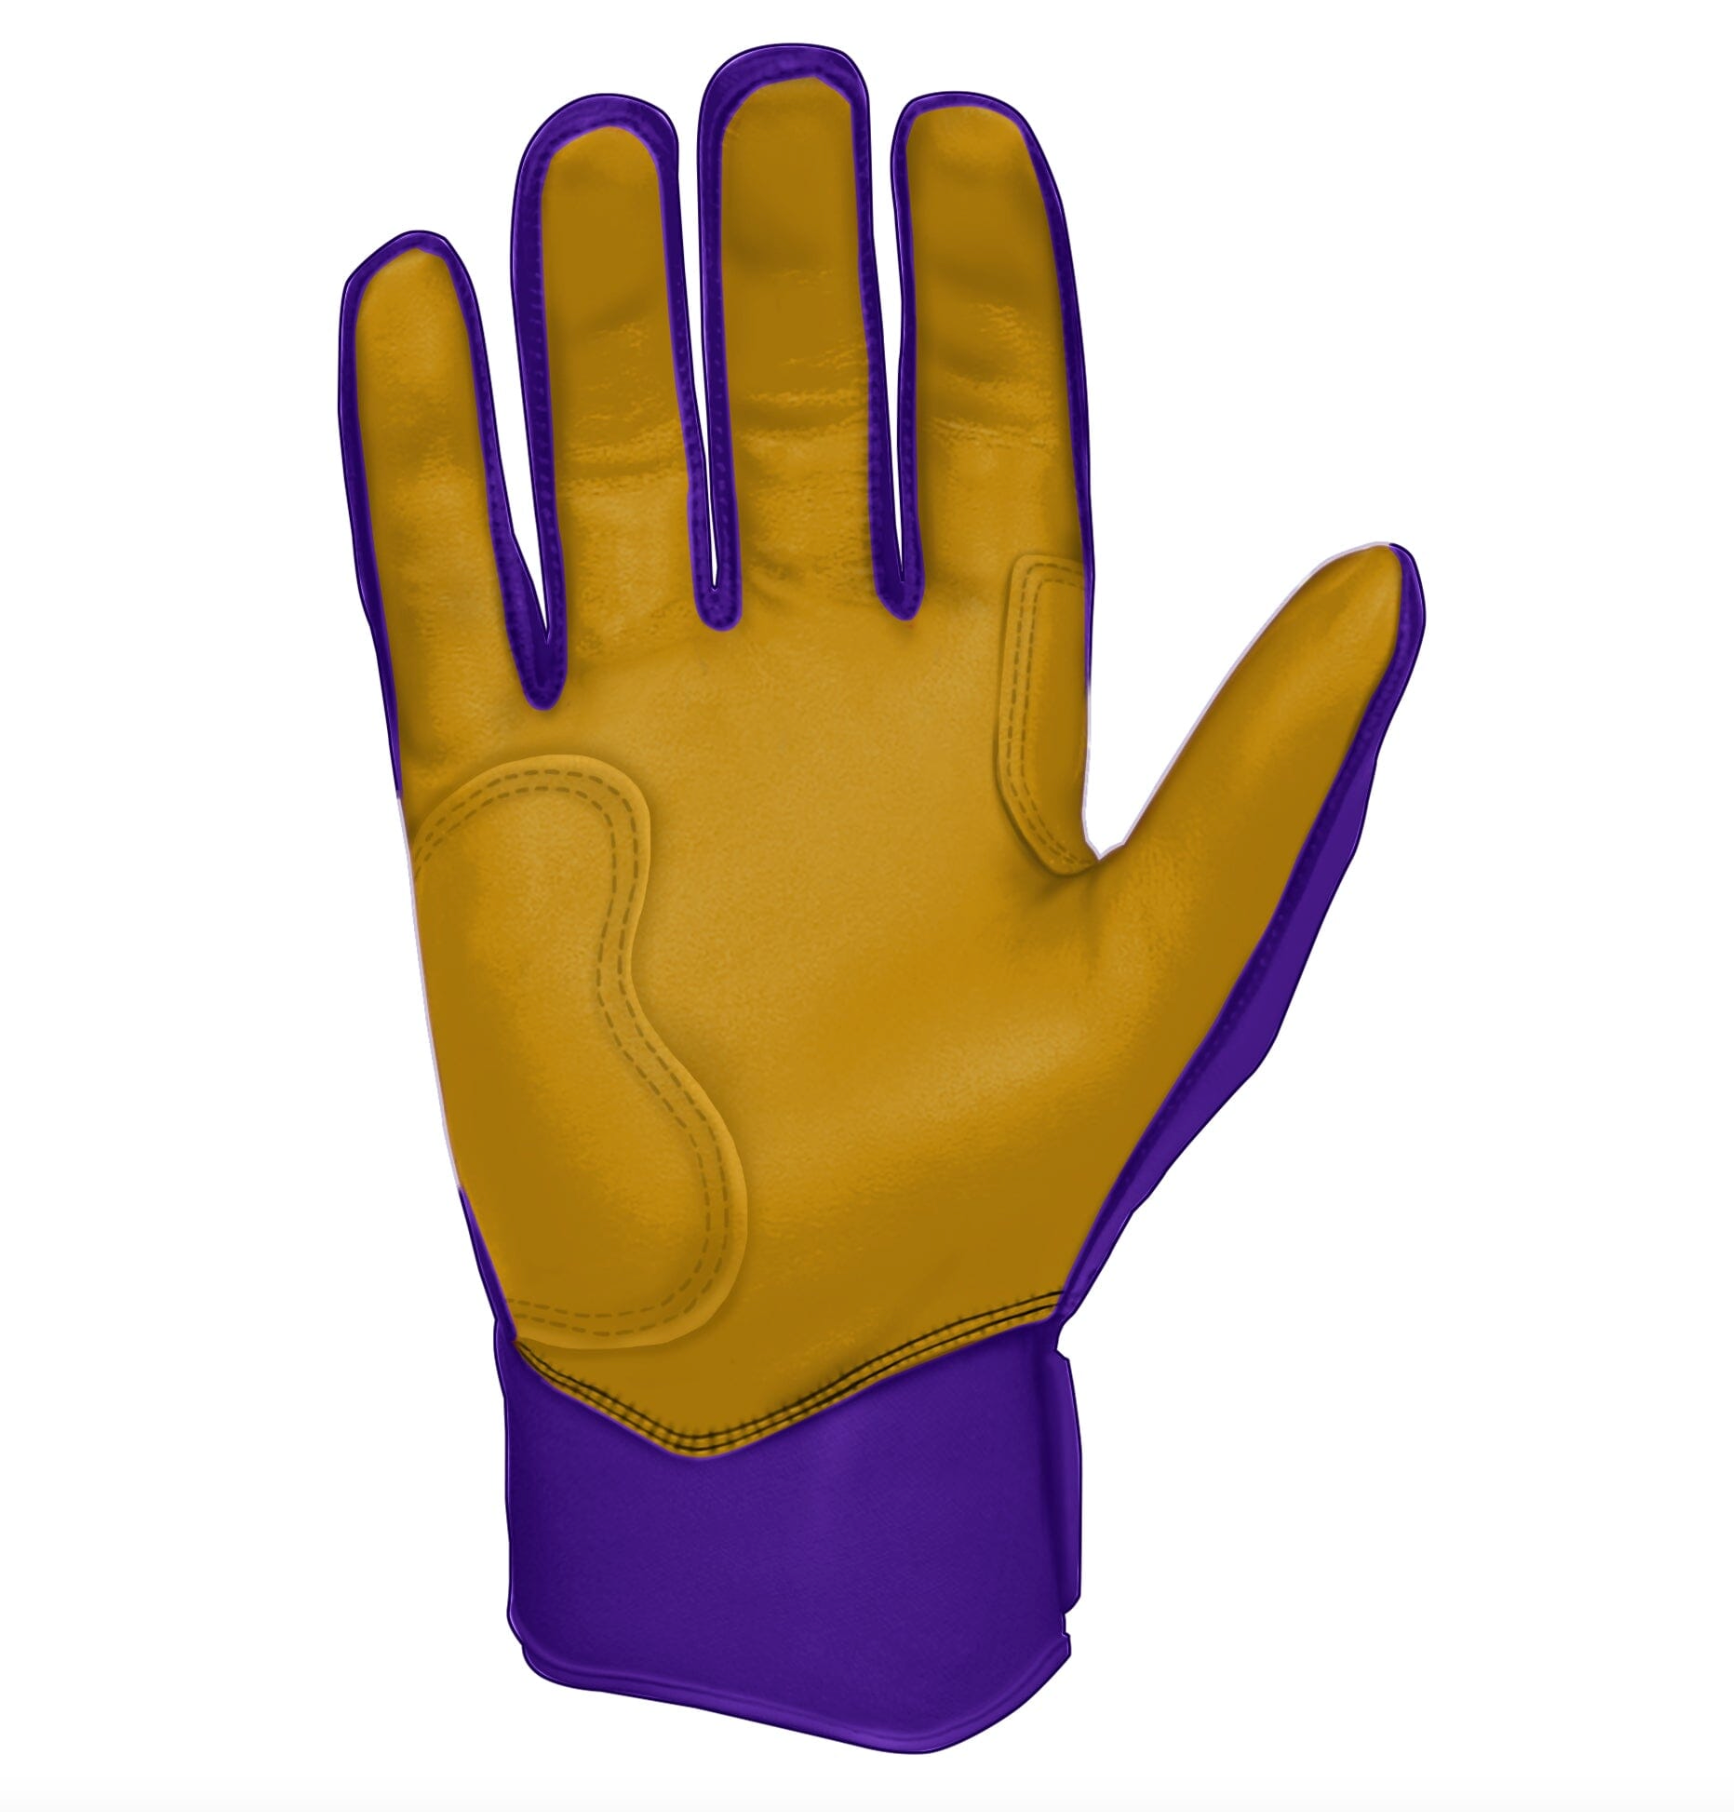 Bruce Bolt Premium Pro Short Cuff Batting Gloves Purple Adult